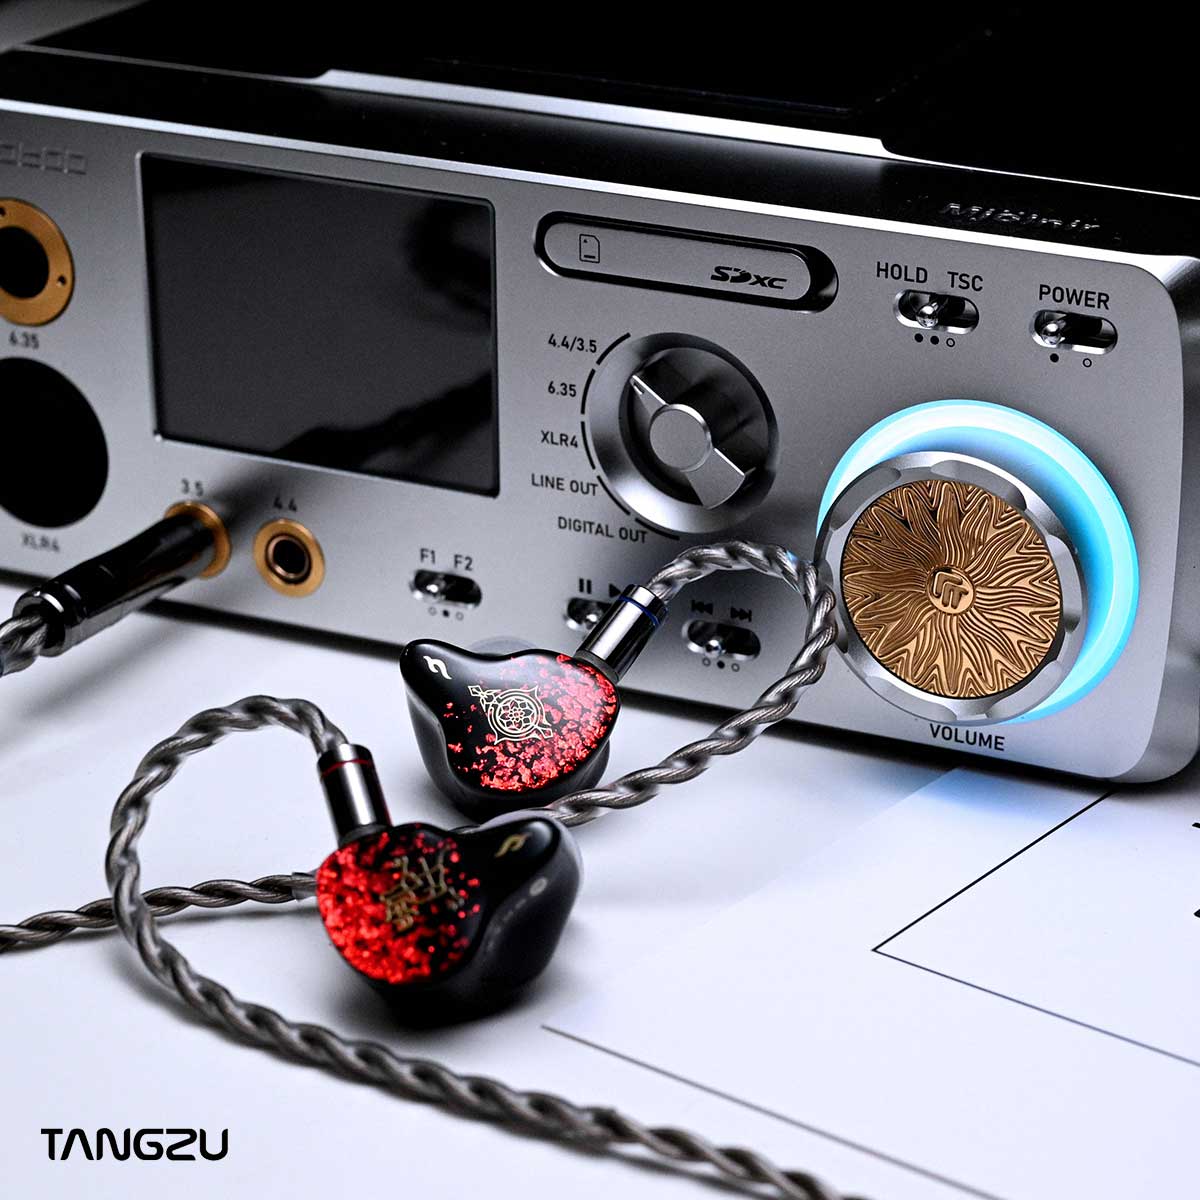 TANGZU NEZHA 6 BA +1 EST IN EAR MONITORS Multi-Drive Wired Earphones IEM 0.78mm 3.5+4.4mm Cable Hybrid Driver Headest